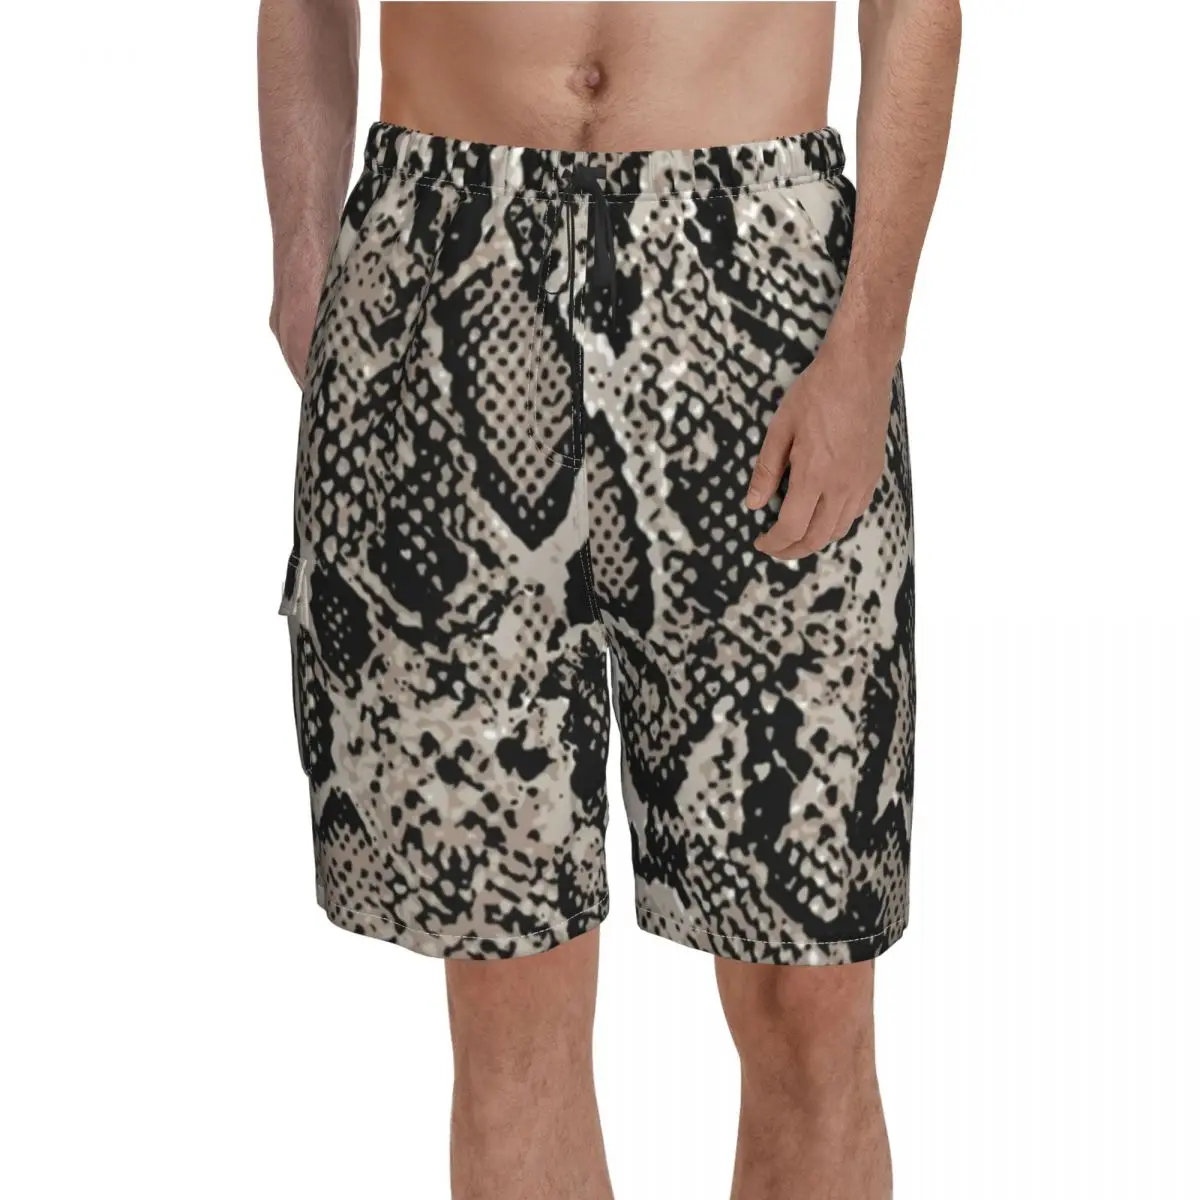 

Python Snakeskin Board Shorts Hot Sale Snake Scale Texture Print Design Beach Short Pants Men's Elastic Waist Swimming Trunks